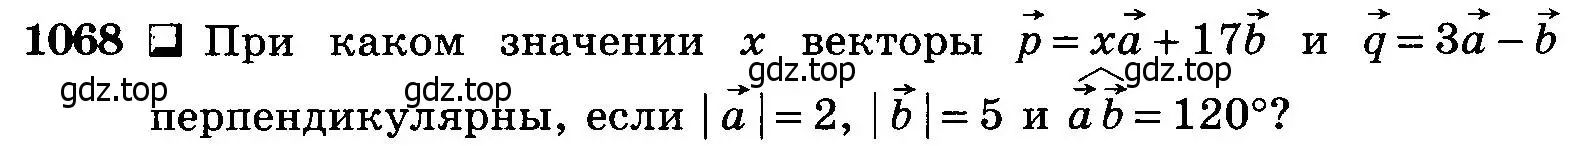 Условие номер 1068 (страница 268) гдз по геометрии 7-9 класс Атанасян, Бутузов, учебник